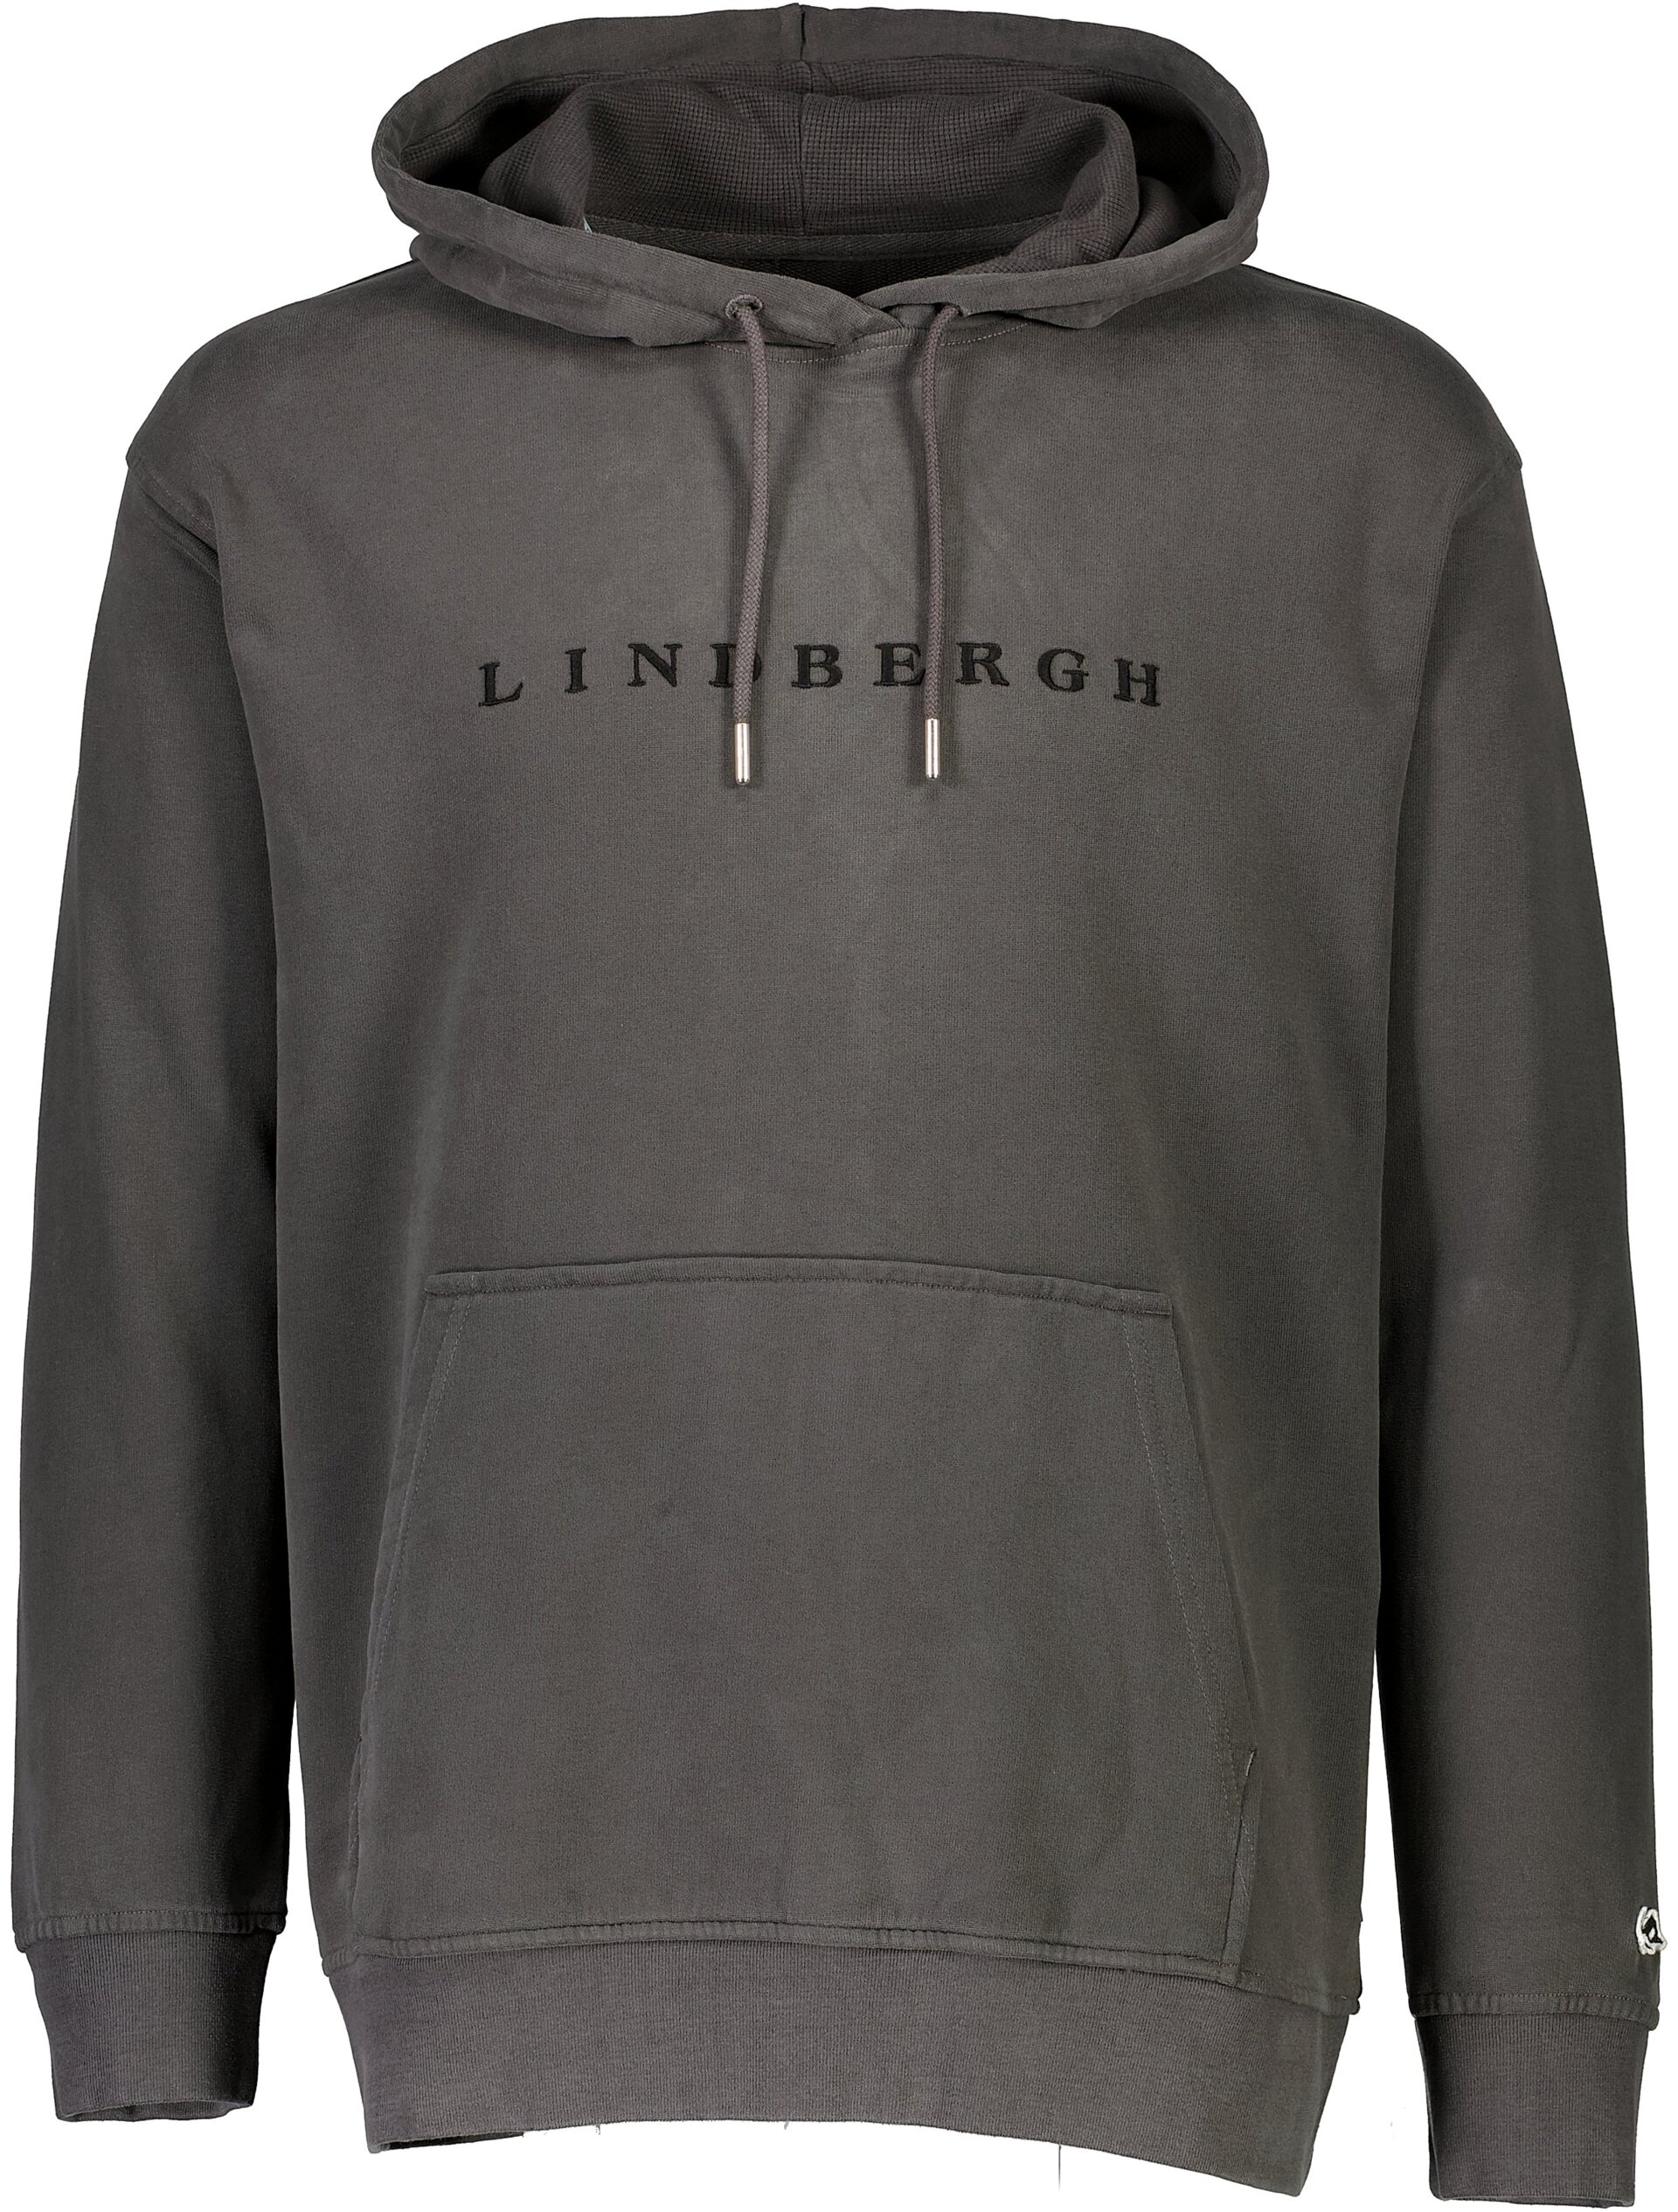 Lindbergh Hoodie grey / charcoal